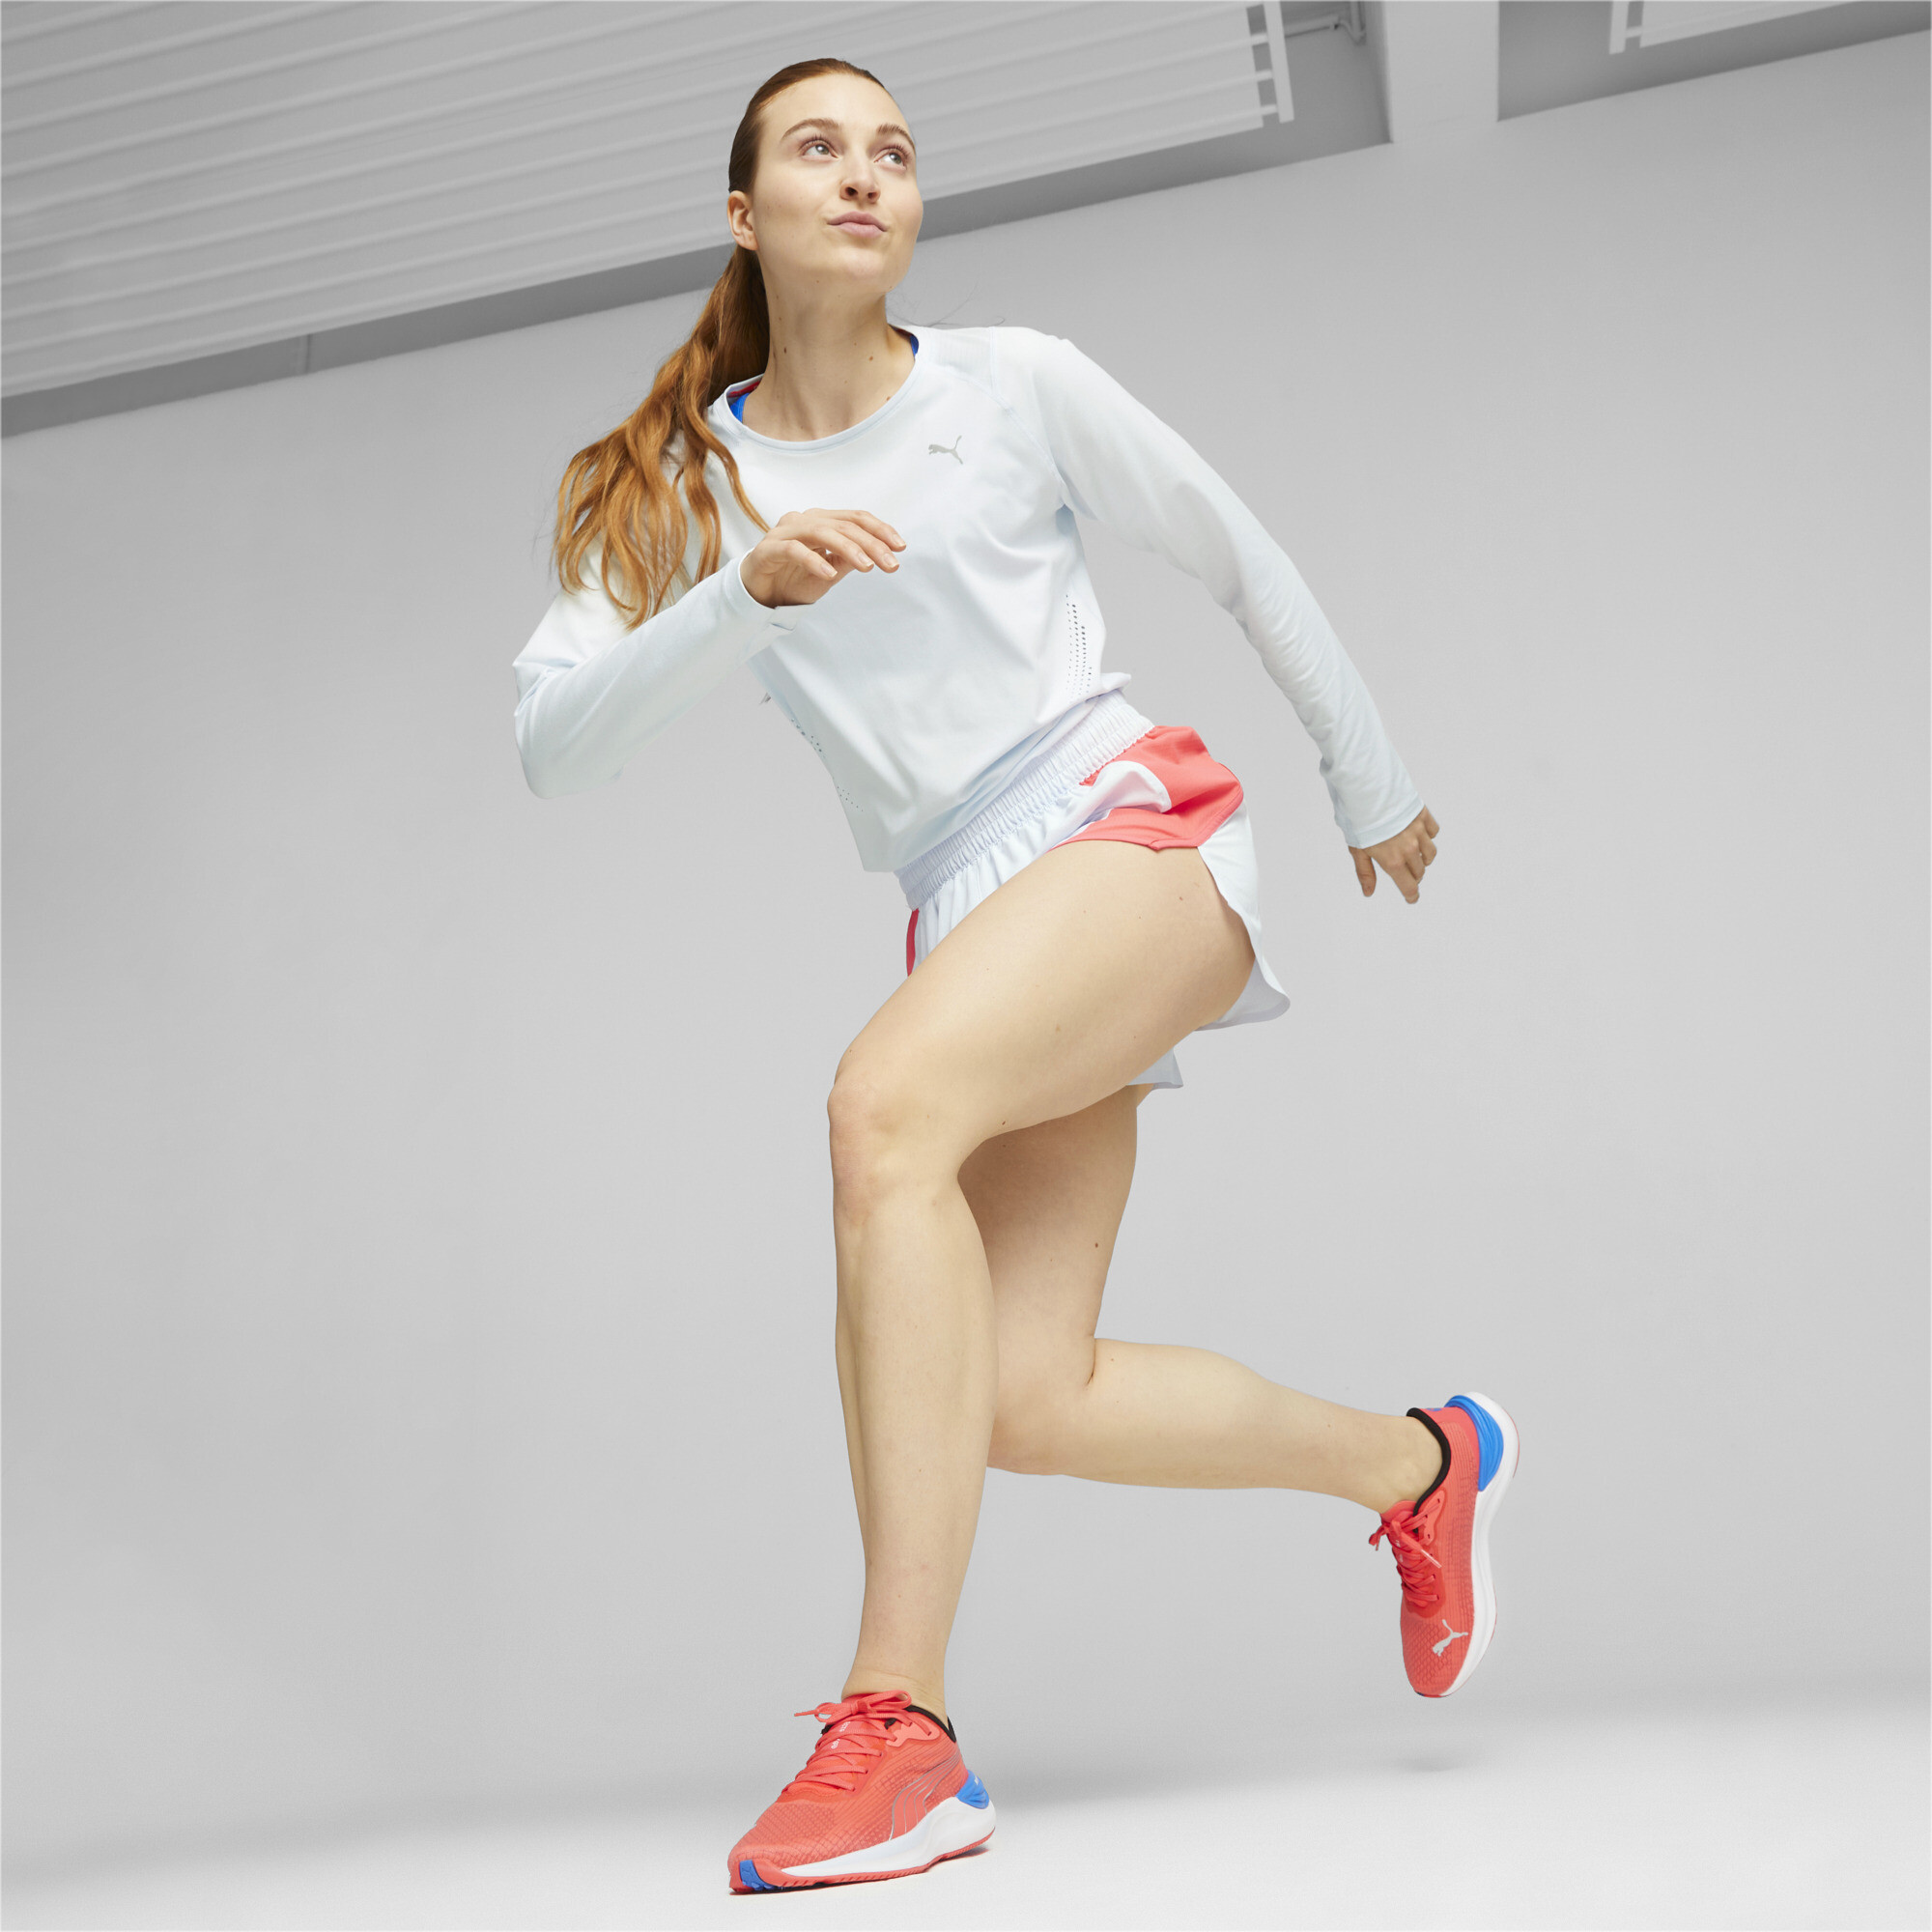 Women's PUMA Electrify NITROâ¢ 3 Running Shoes In Red, Size EU 37